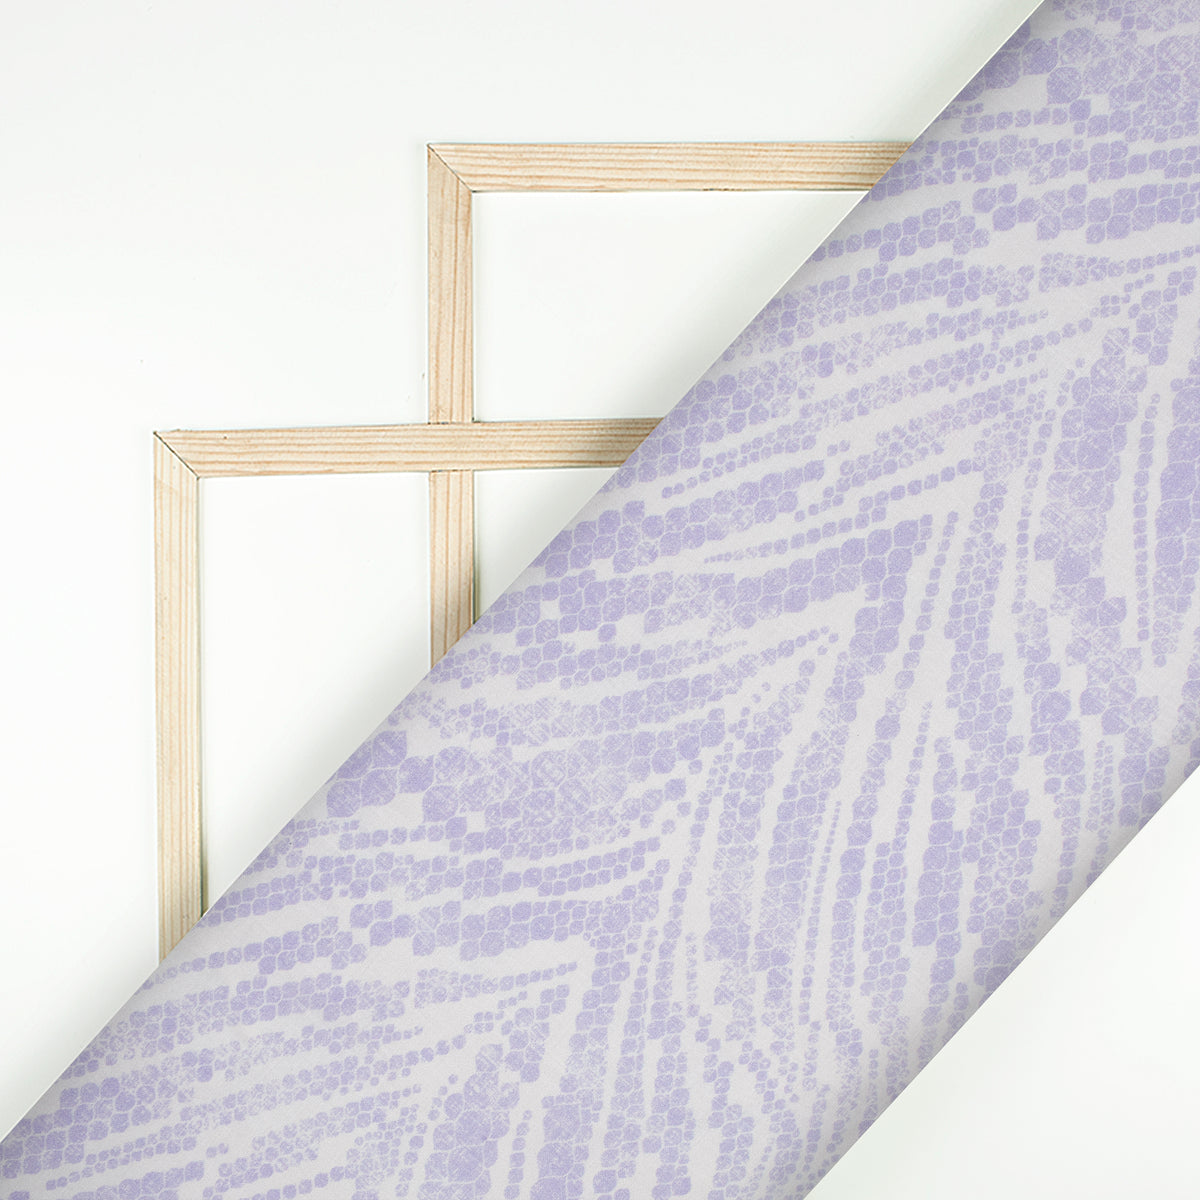 Periwinkle Purple And White Shibori Pattern Digital Print Viscose Chanderi Fabric